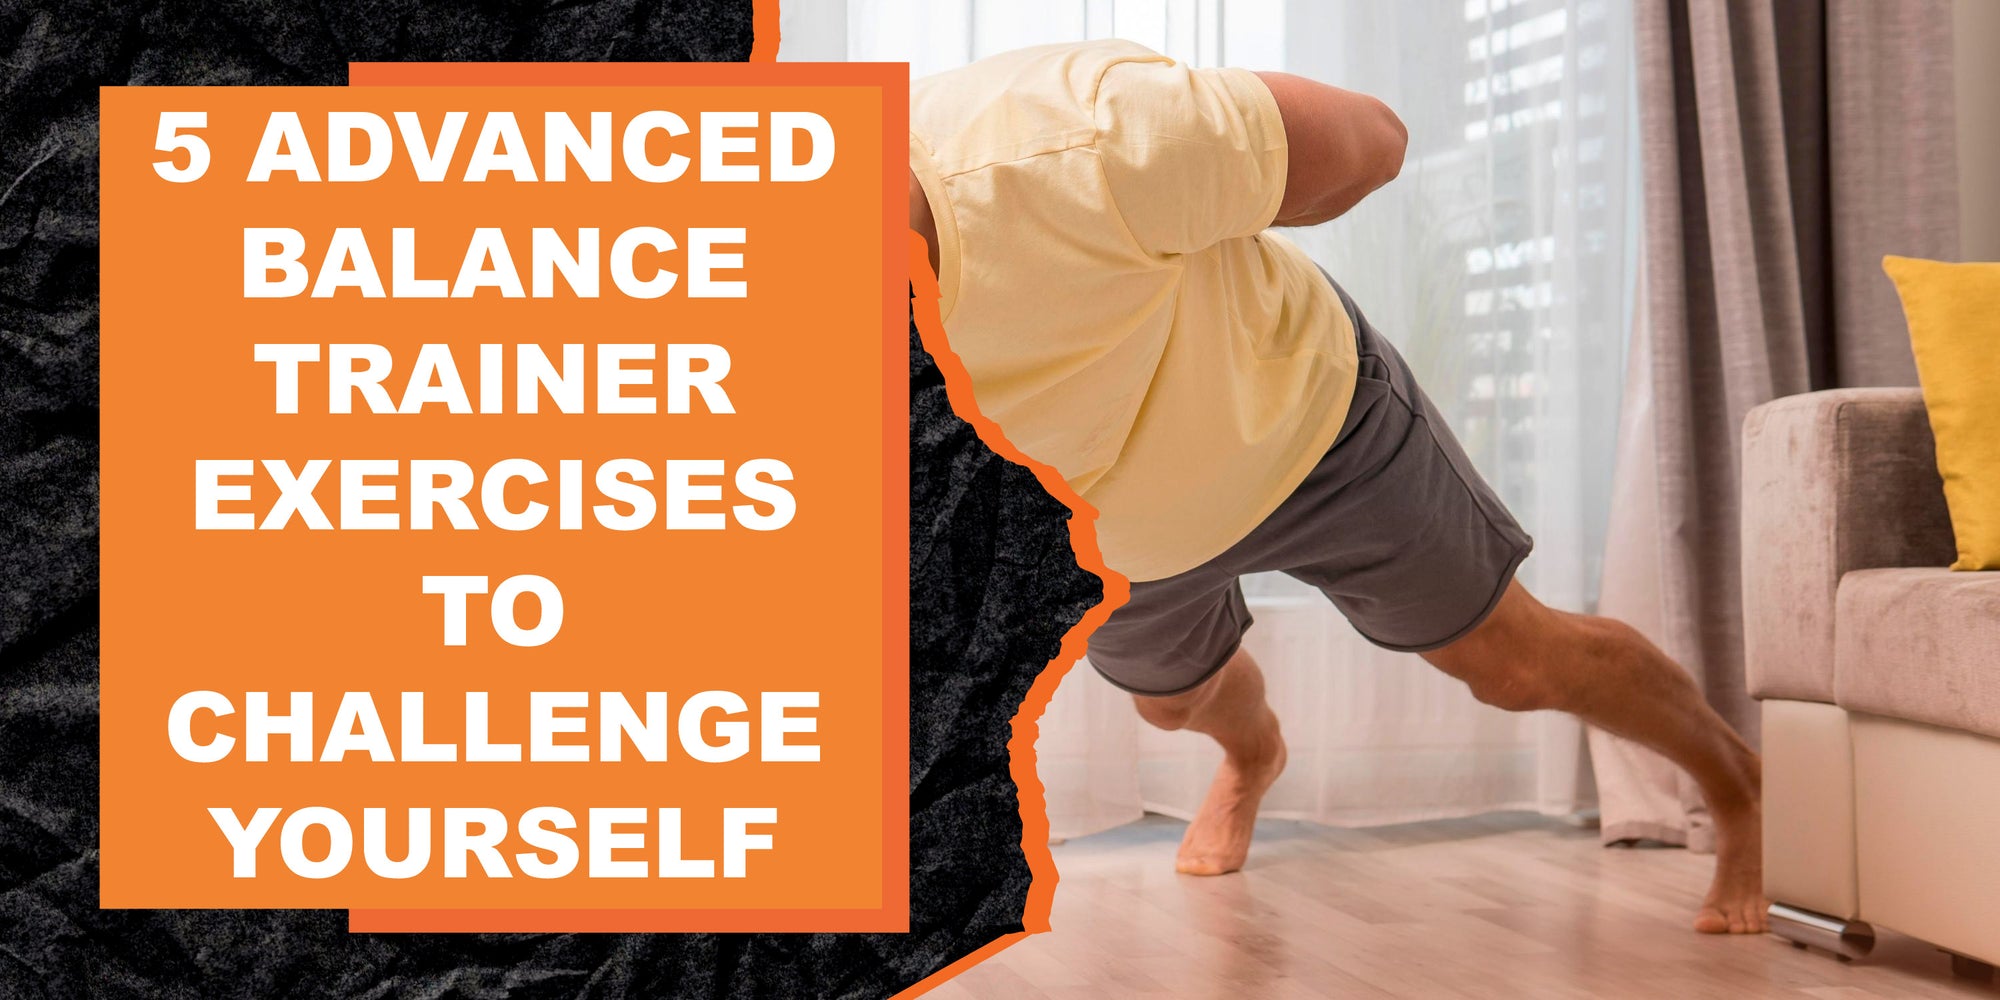 5 Advanced Balance Trainer Exercises to Challenge Yourself